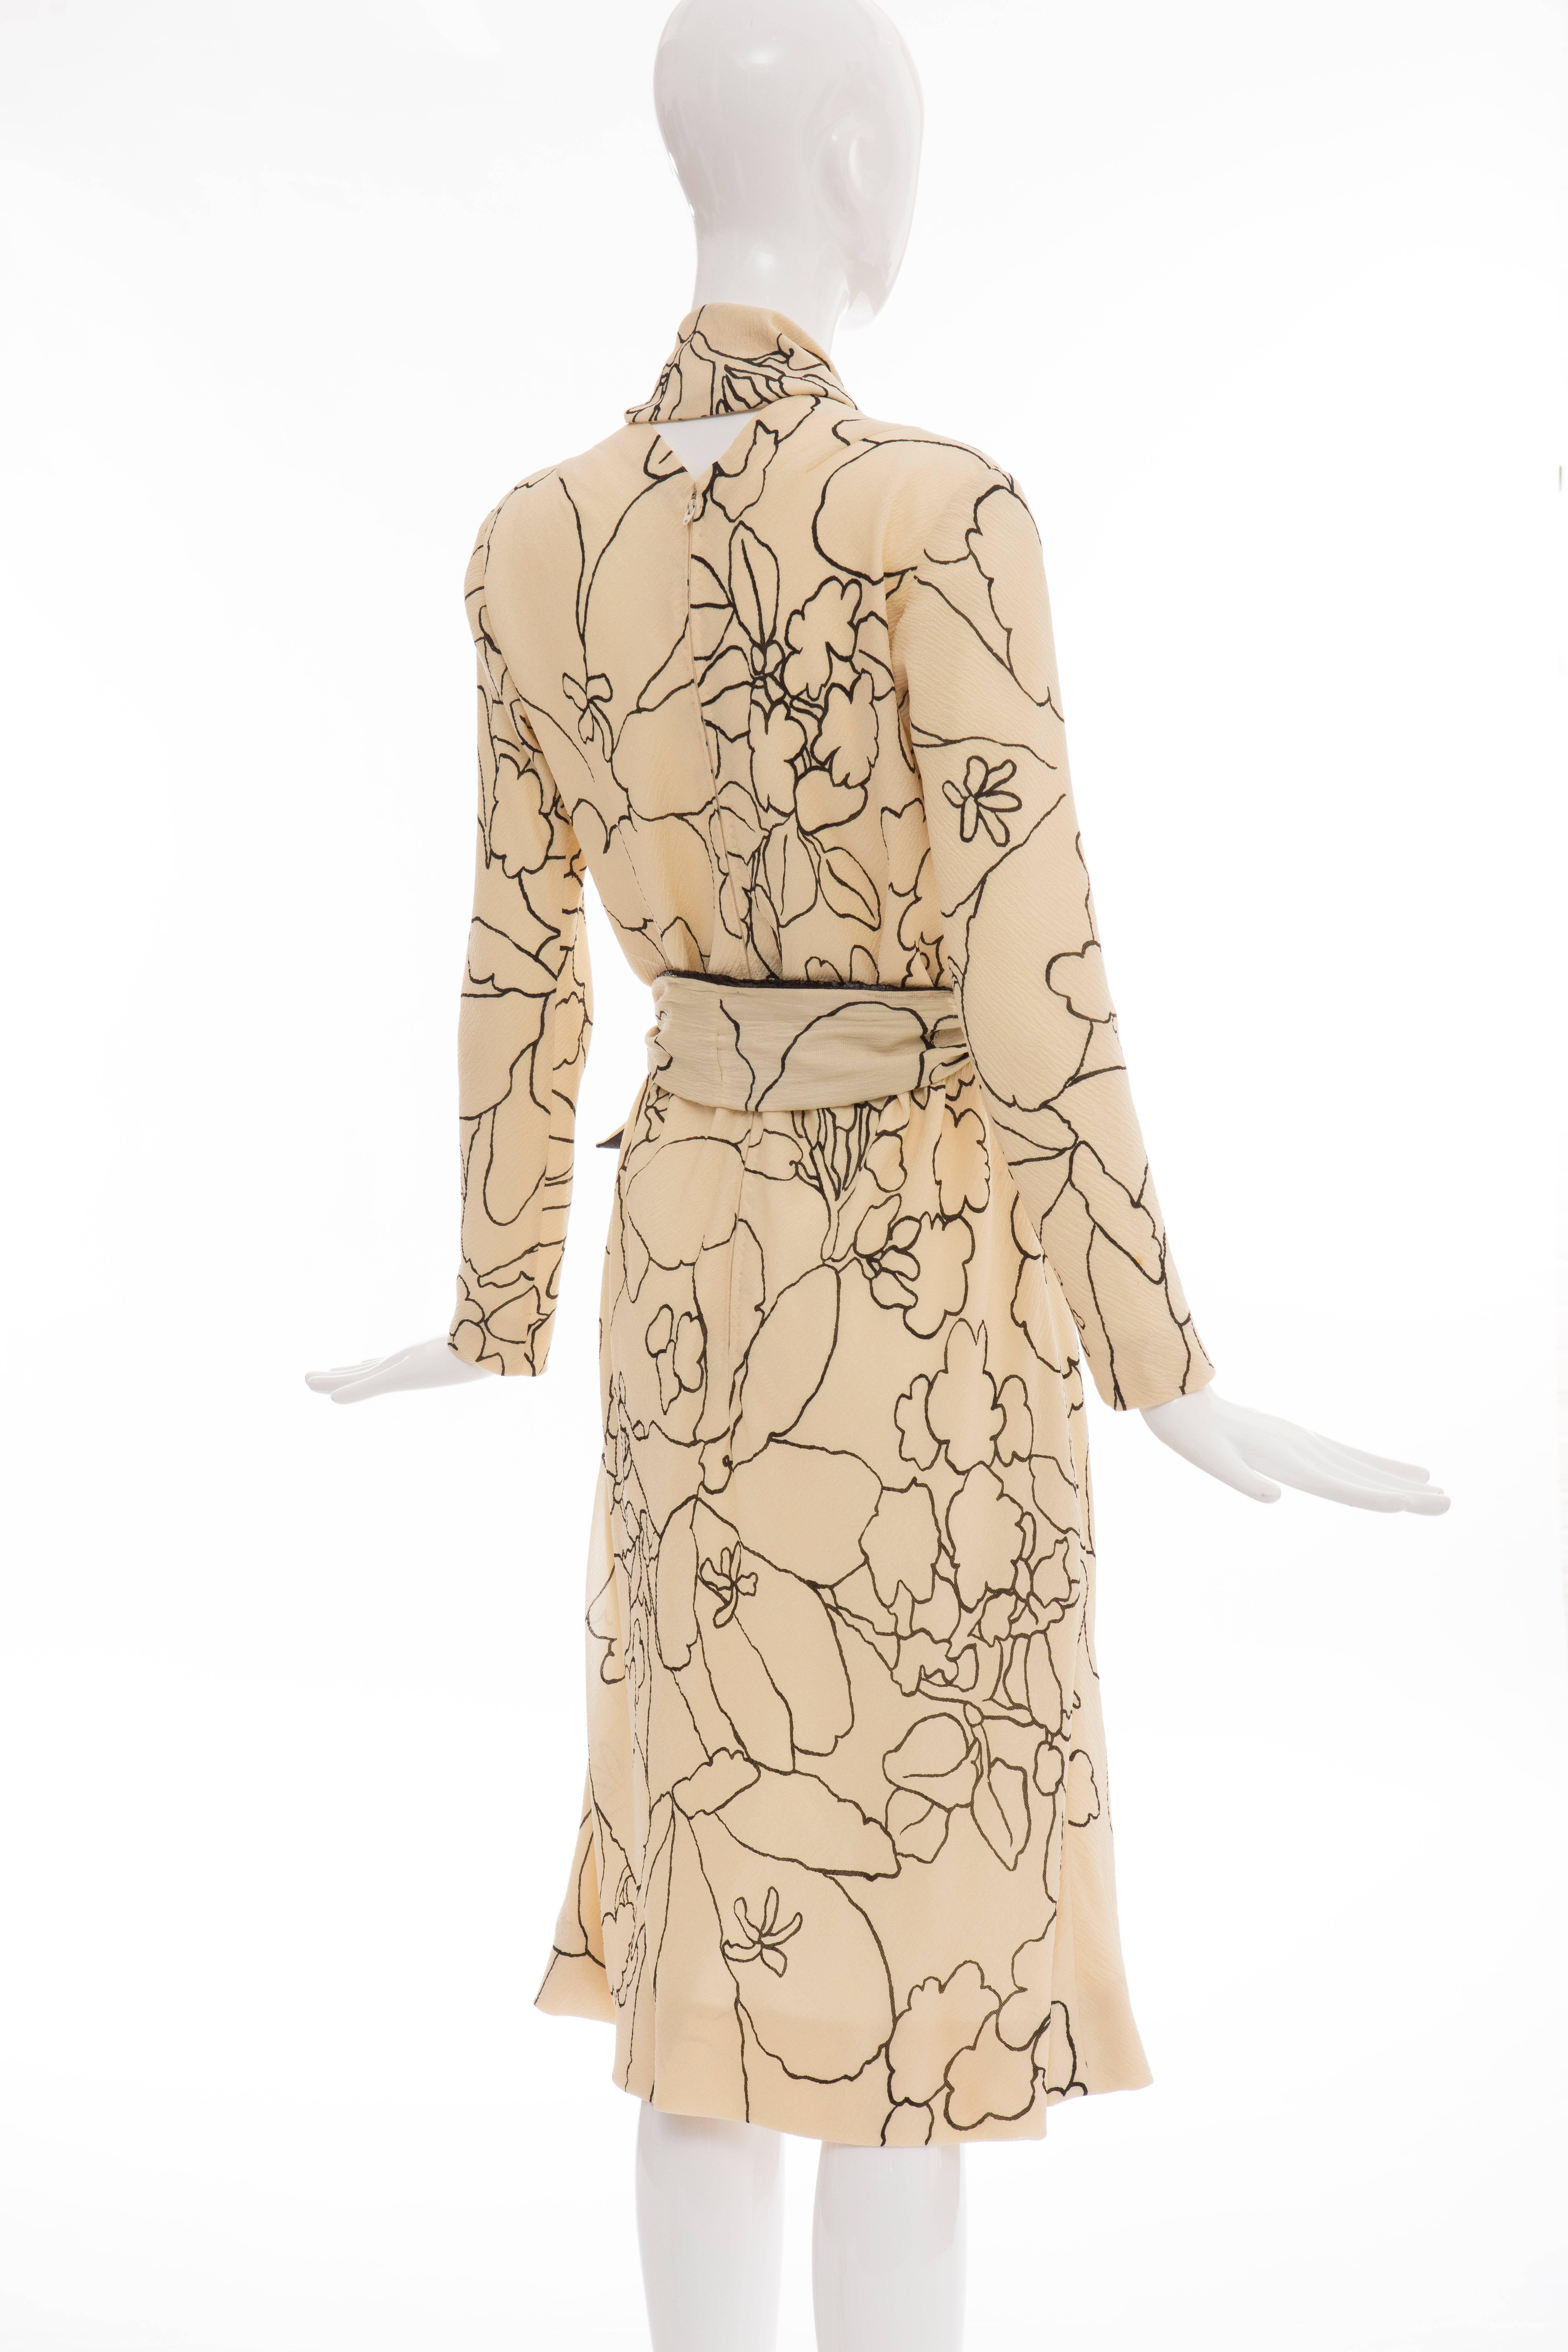 Pauline Trigere Cream Black Floral Silk Crepe Long Sleeve Dress, Circa 1980s 2